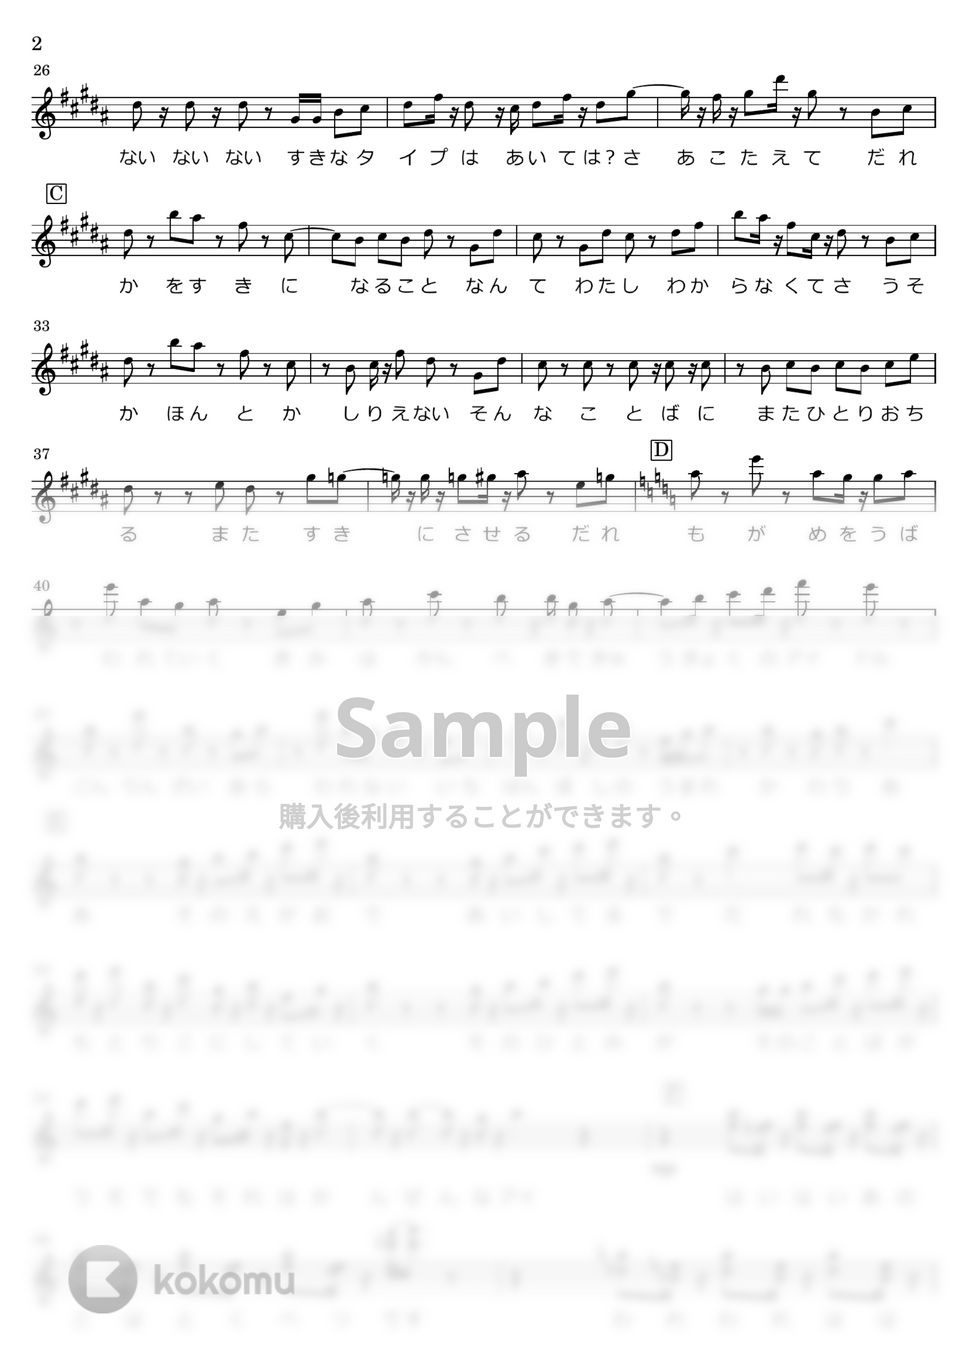 YOASOBI - アイドル (C と B♭向け譜面) by mt08